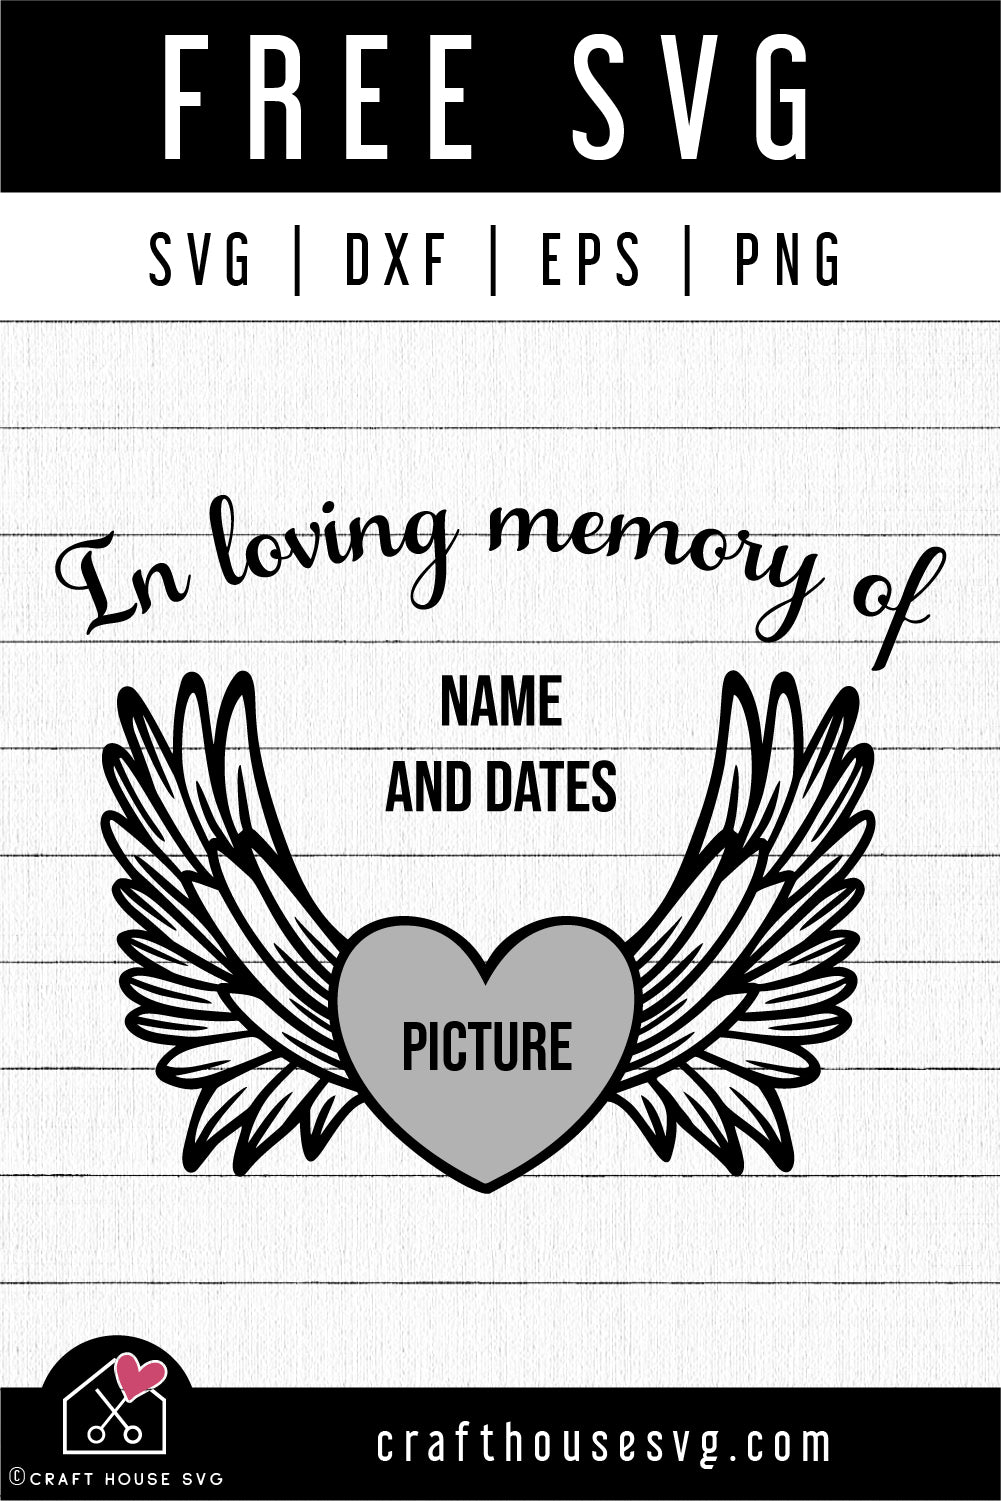 FREE Angel wings SVG In loving memory of SVG cut file - Craft